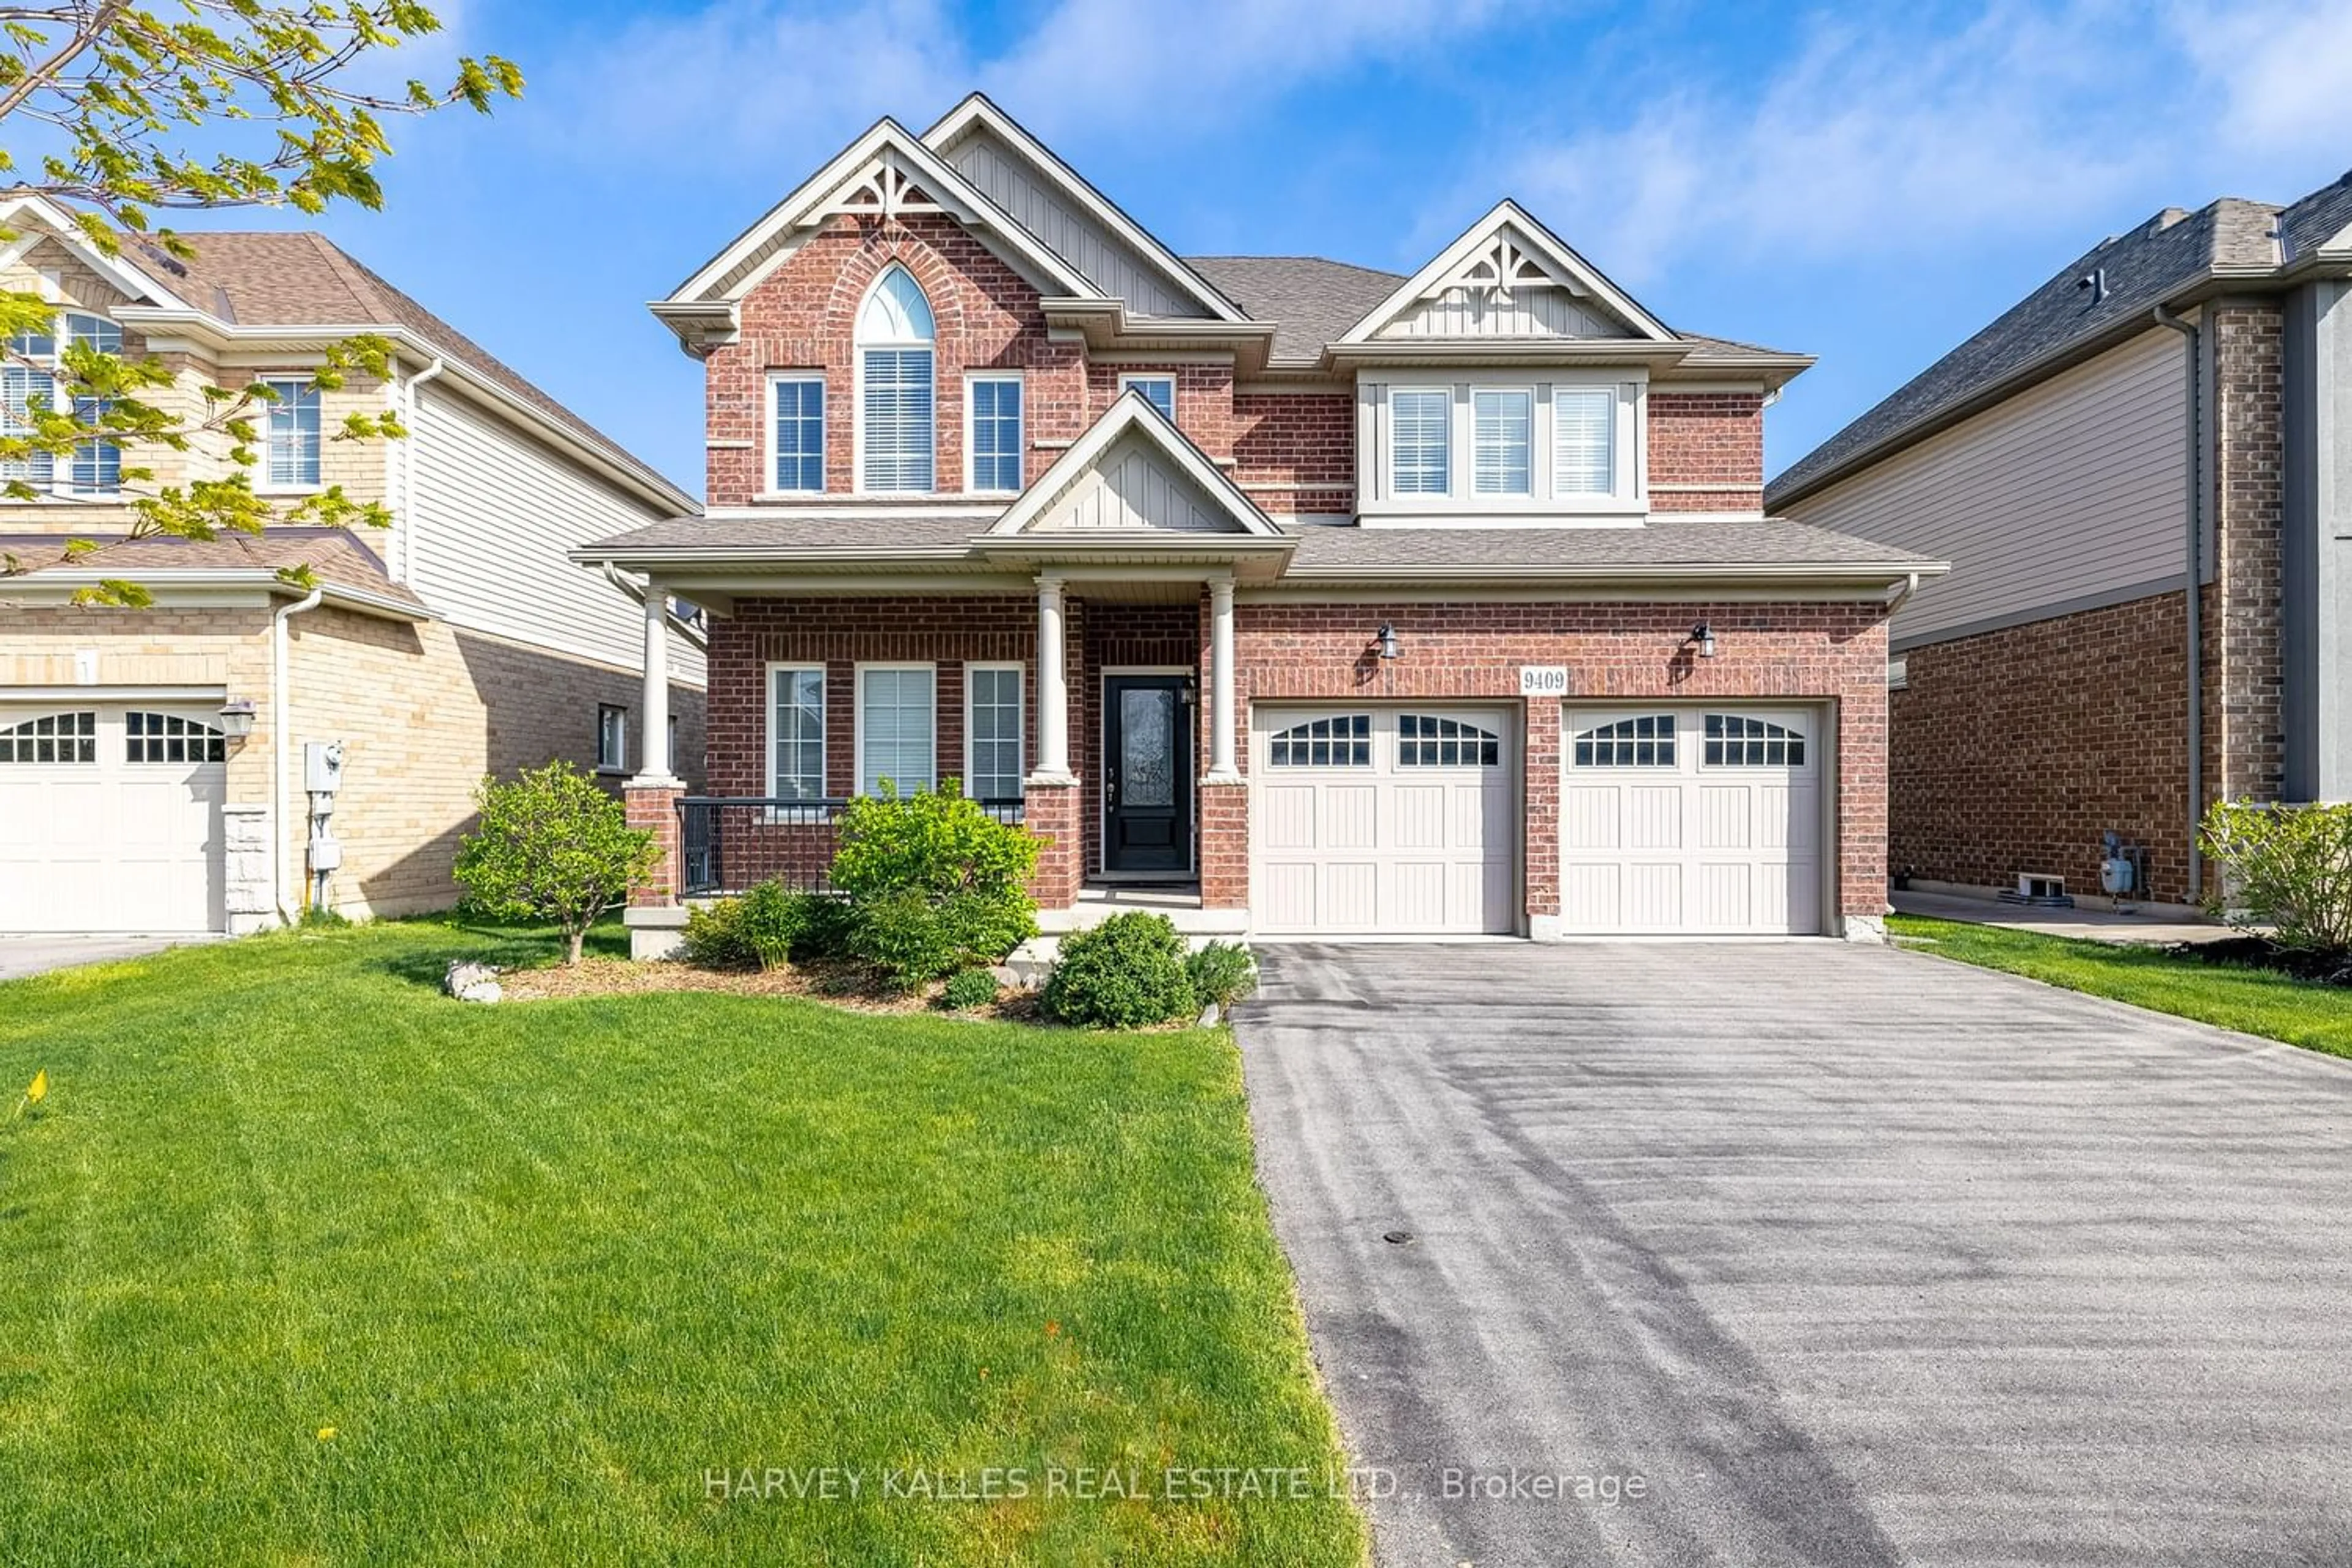 Home with brick exterior material for 9409 Hendershot Blvd, Niagara Falls Ontario L2H 0G1